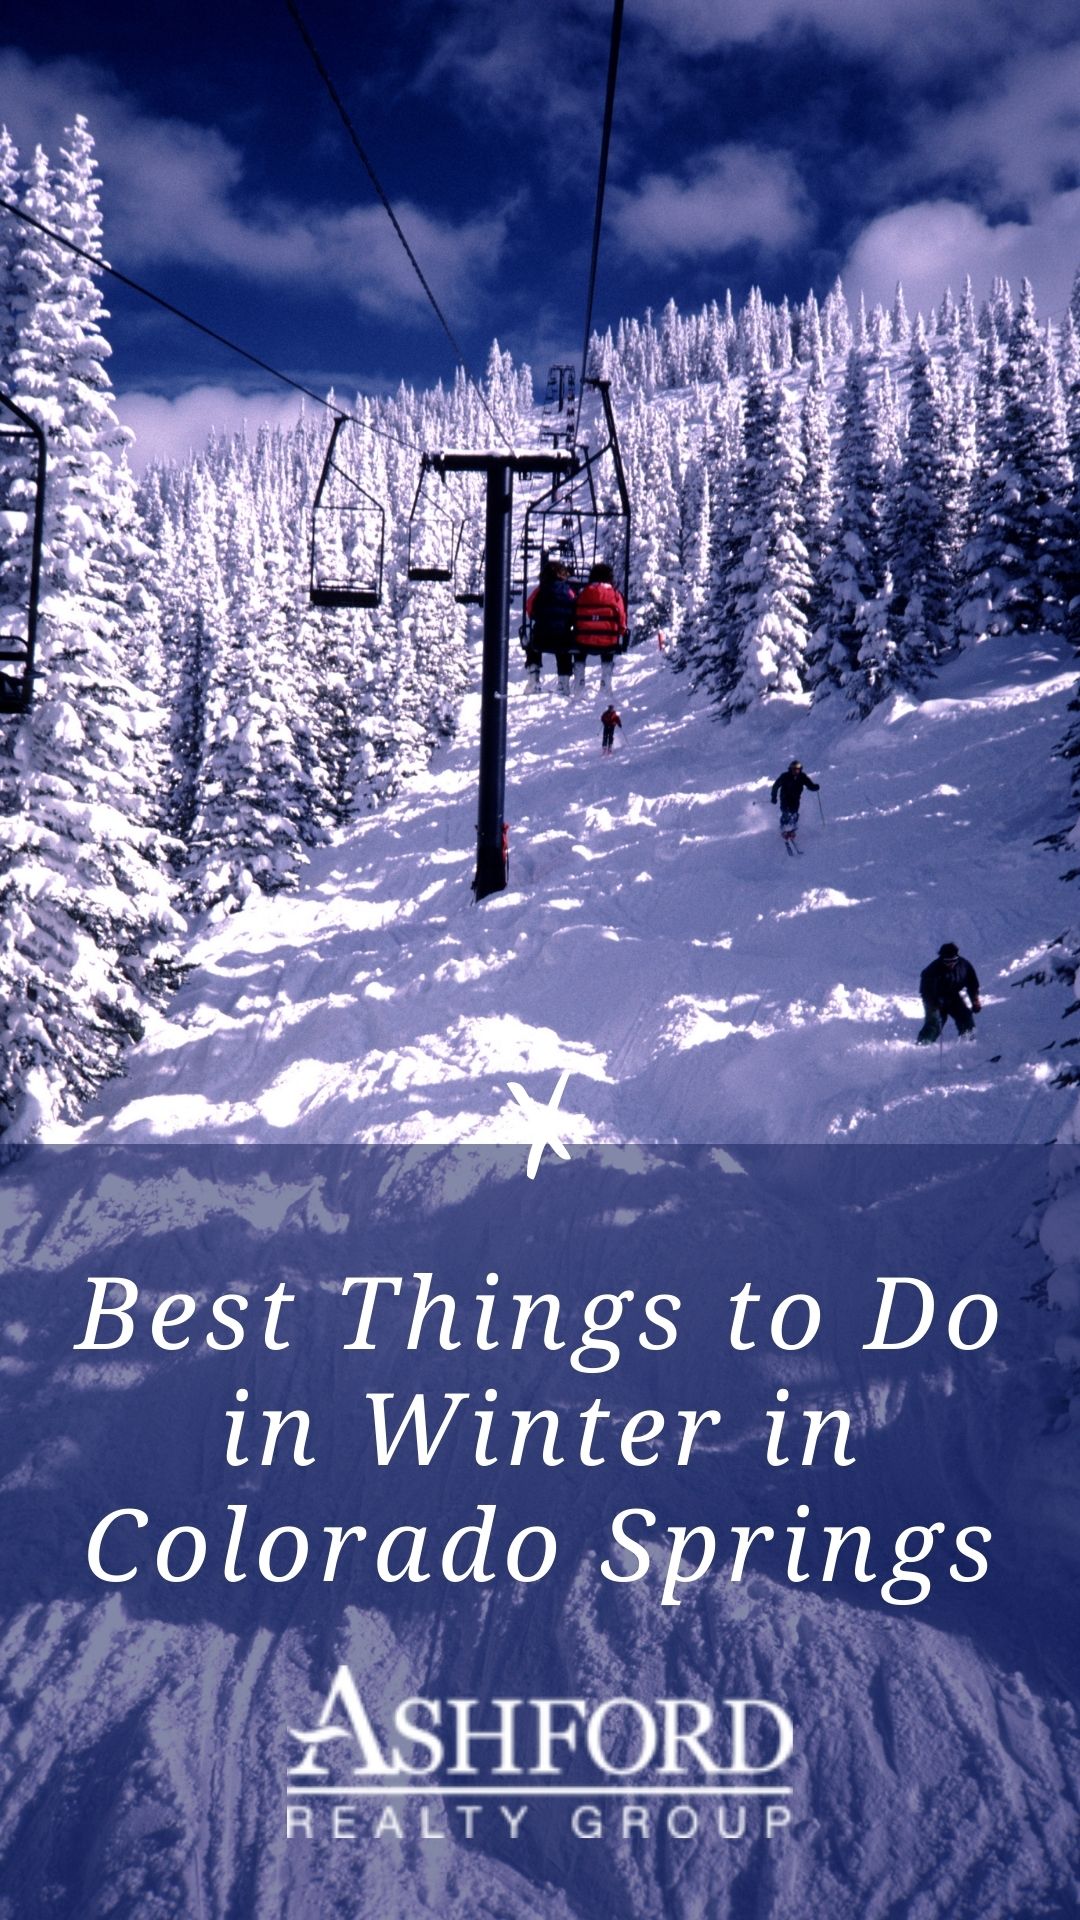 Best Things to Do in Winter in Colorado Springs